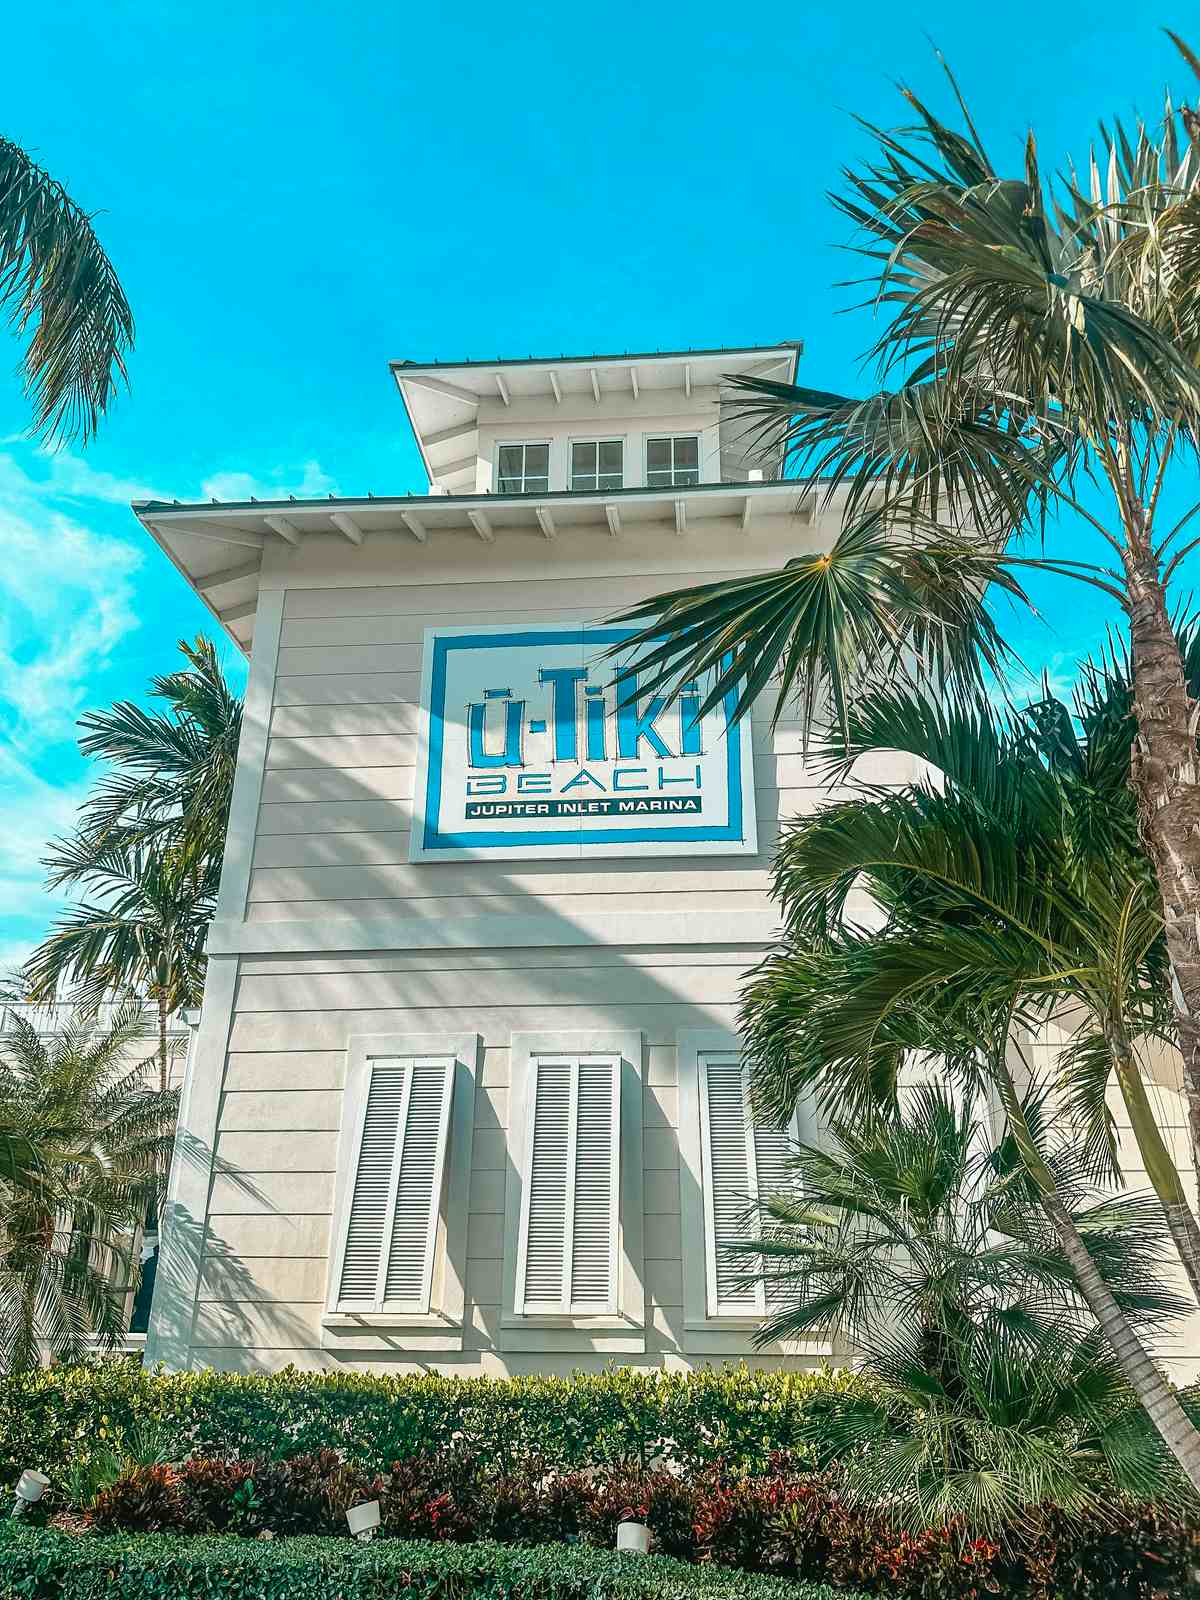 U Tiki Beach Jupiter Florida restaurant